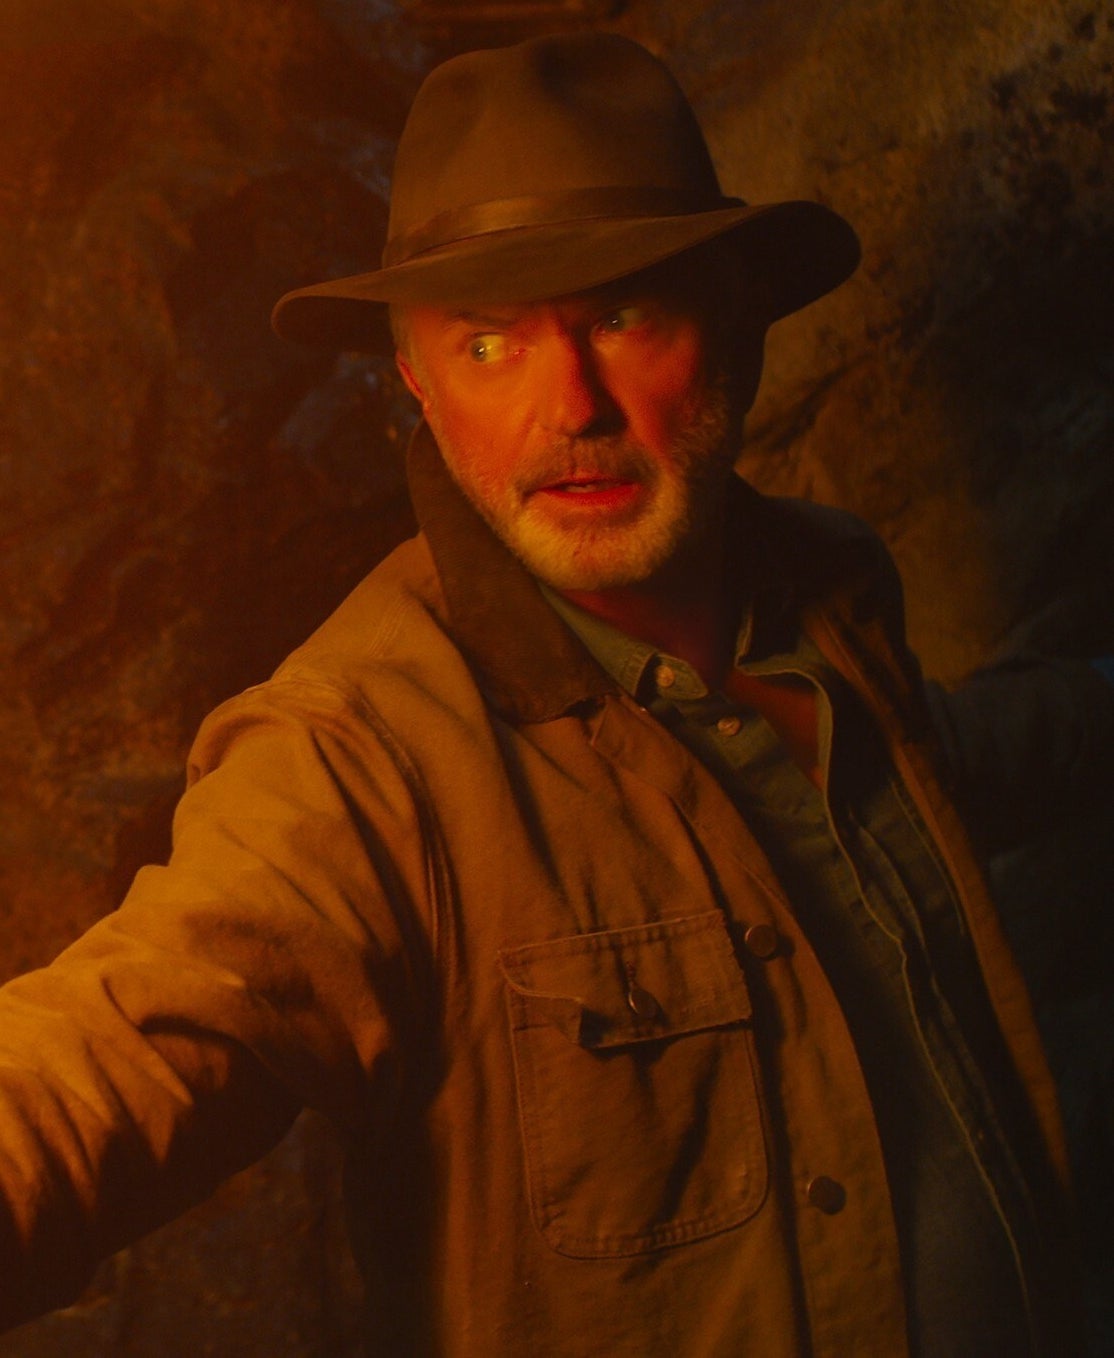 Sam Neill in Jurassic Park: Dominion